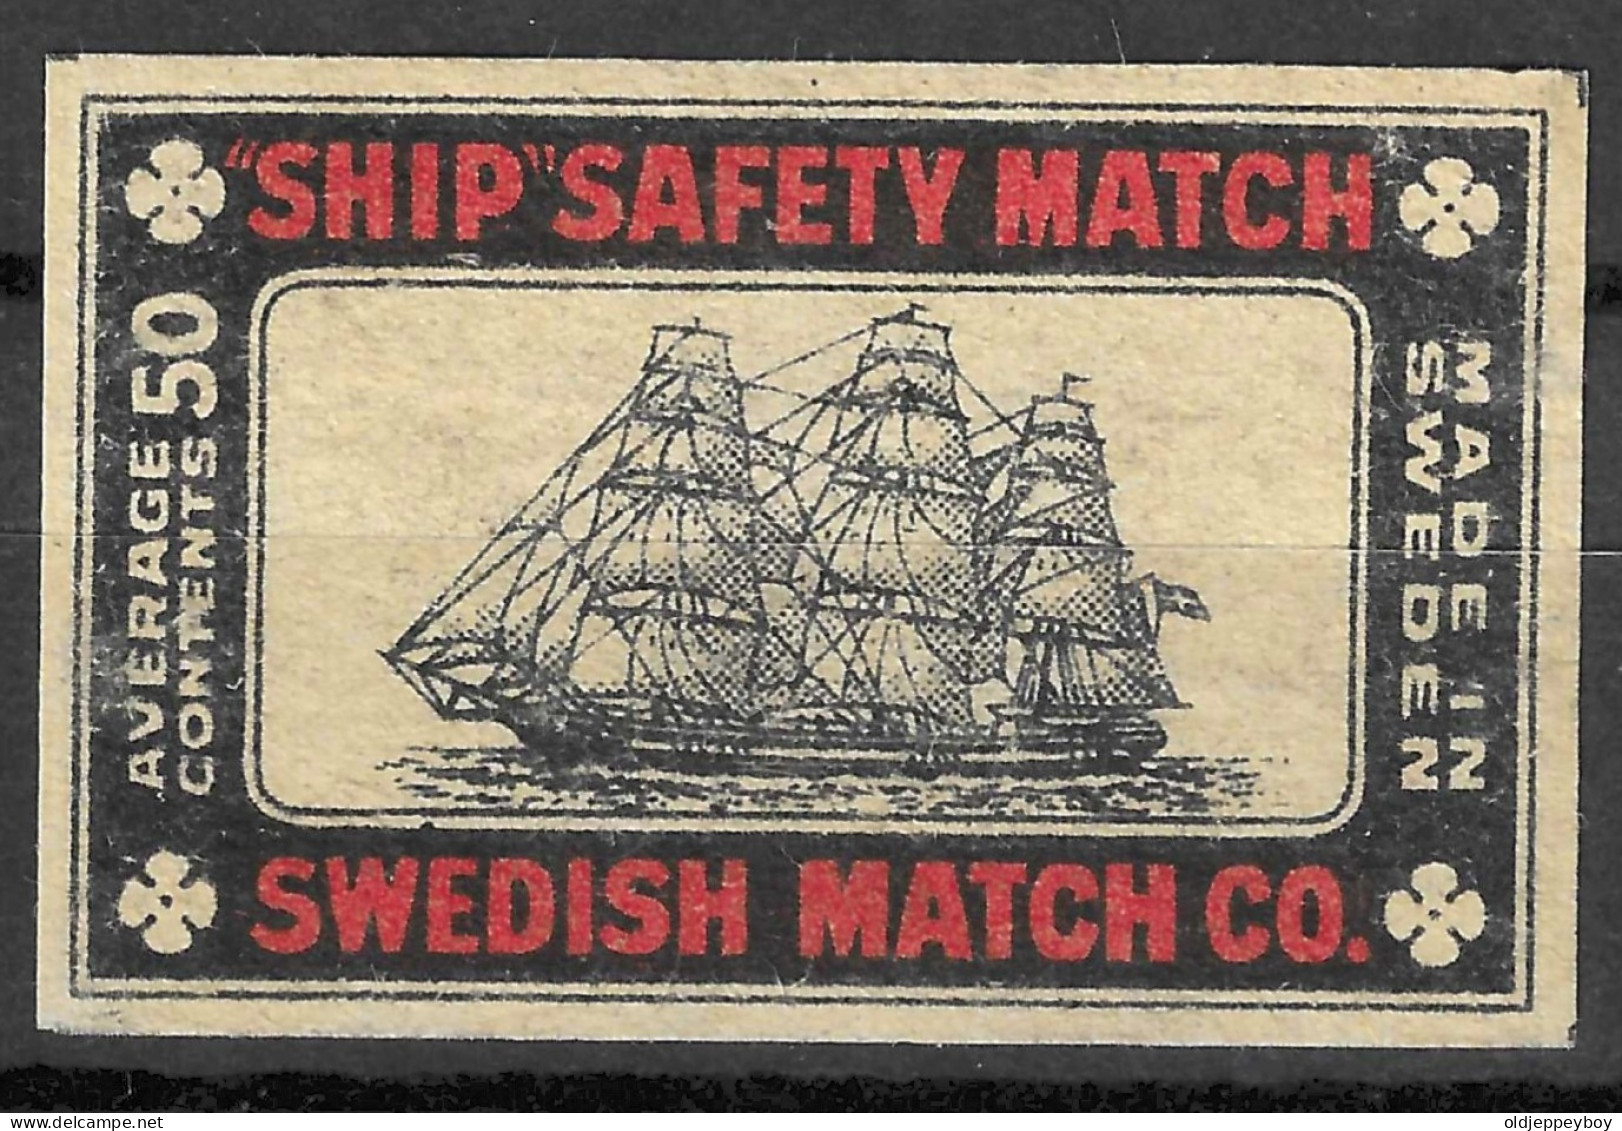 MADE IN SWEDEN VINTAGE Phillumeny MATCHBOX LABEL "SHIP" SWEDISH MATCH CO.   5.5  X 3.5 CM  RARE - Zündholzschachteletiketten